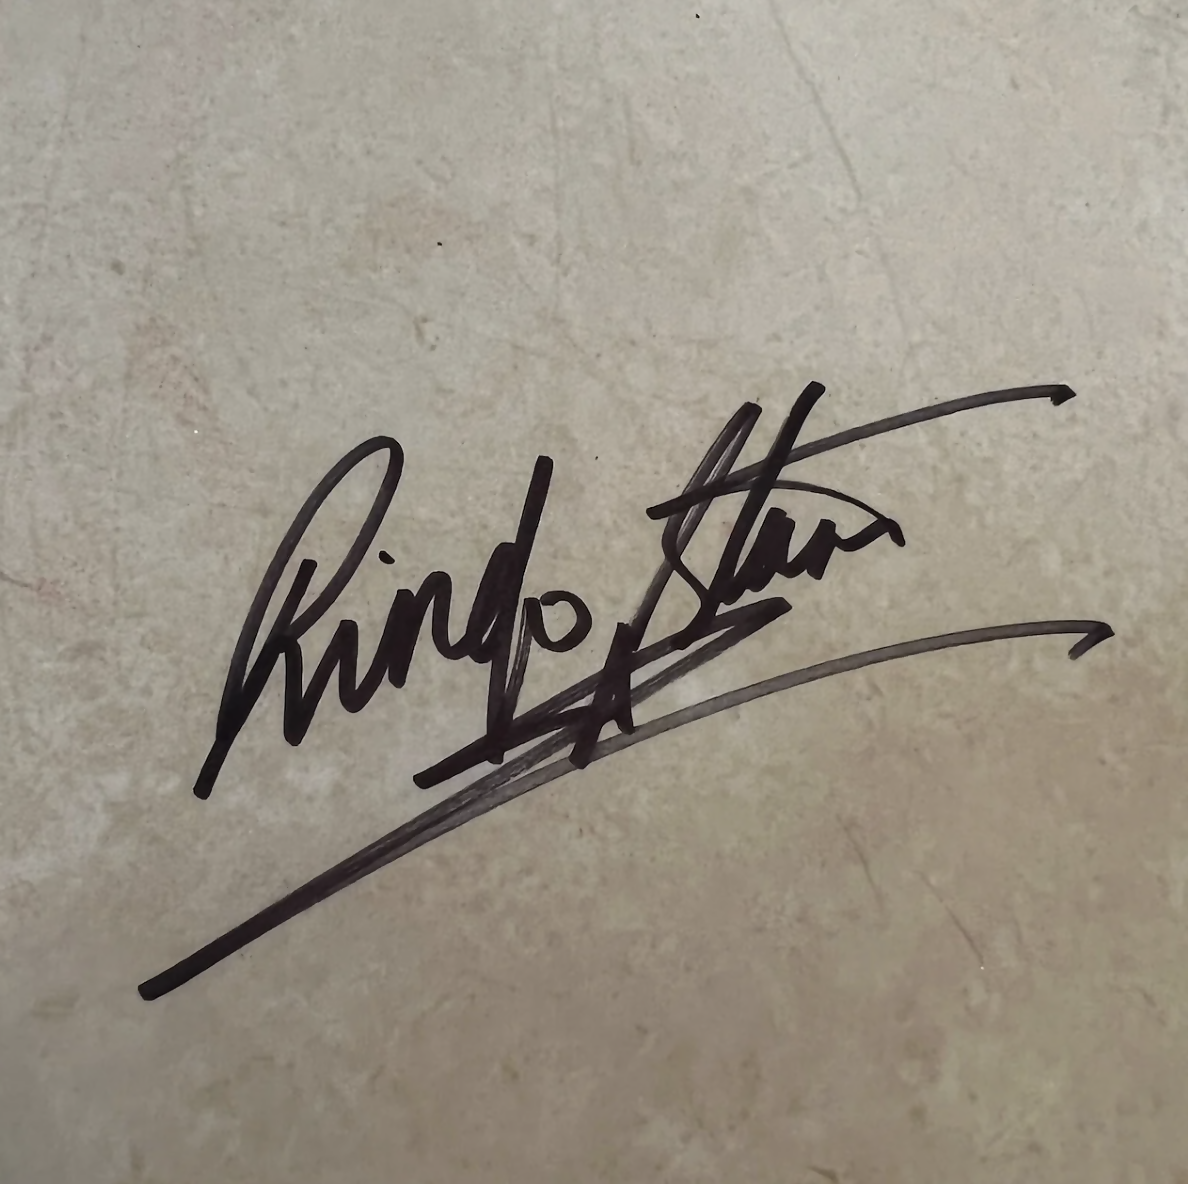 1970s Ringo Starr Signed Autographed The Beatles Tambourine New Era Drum Head